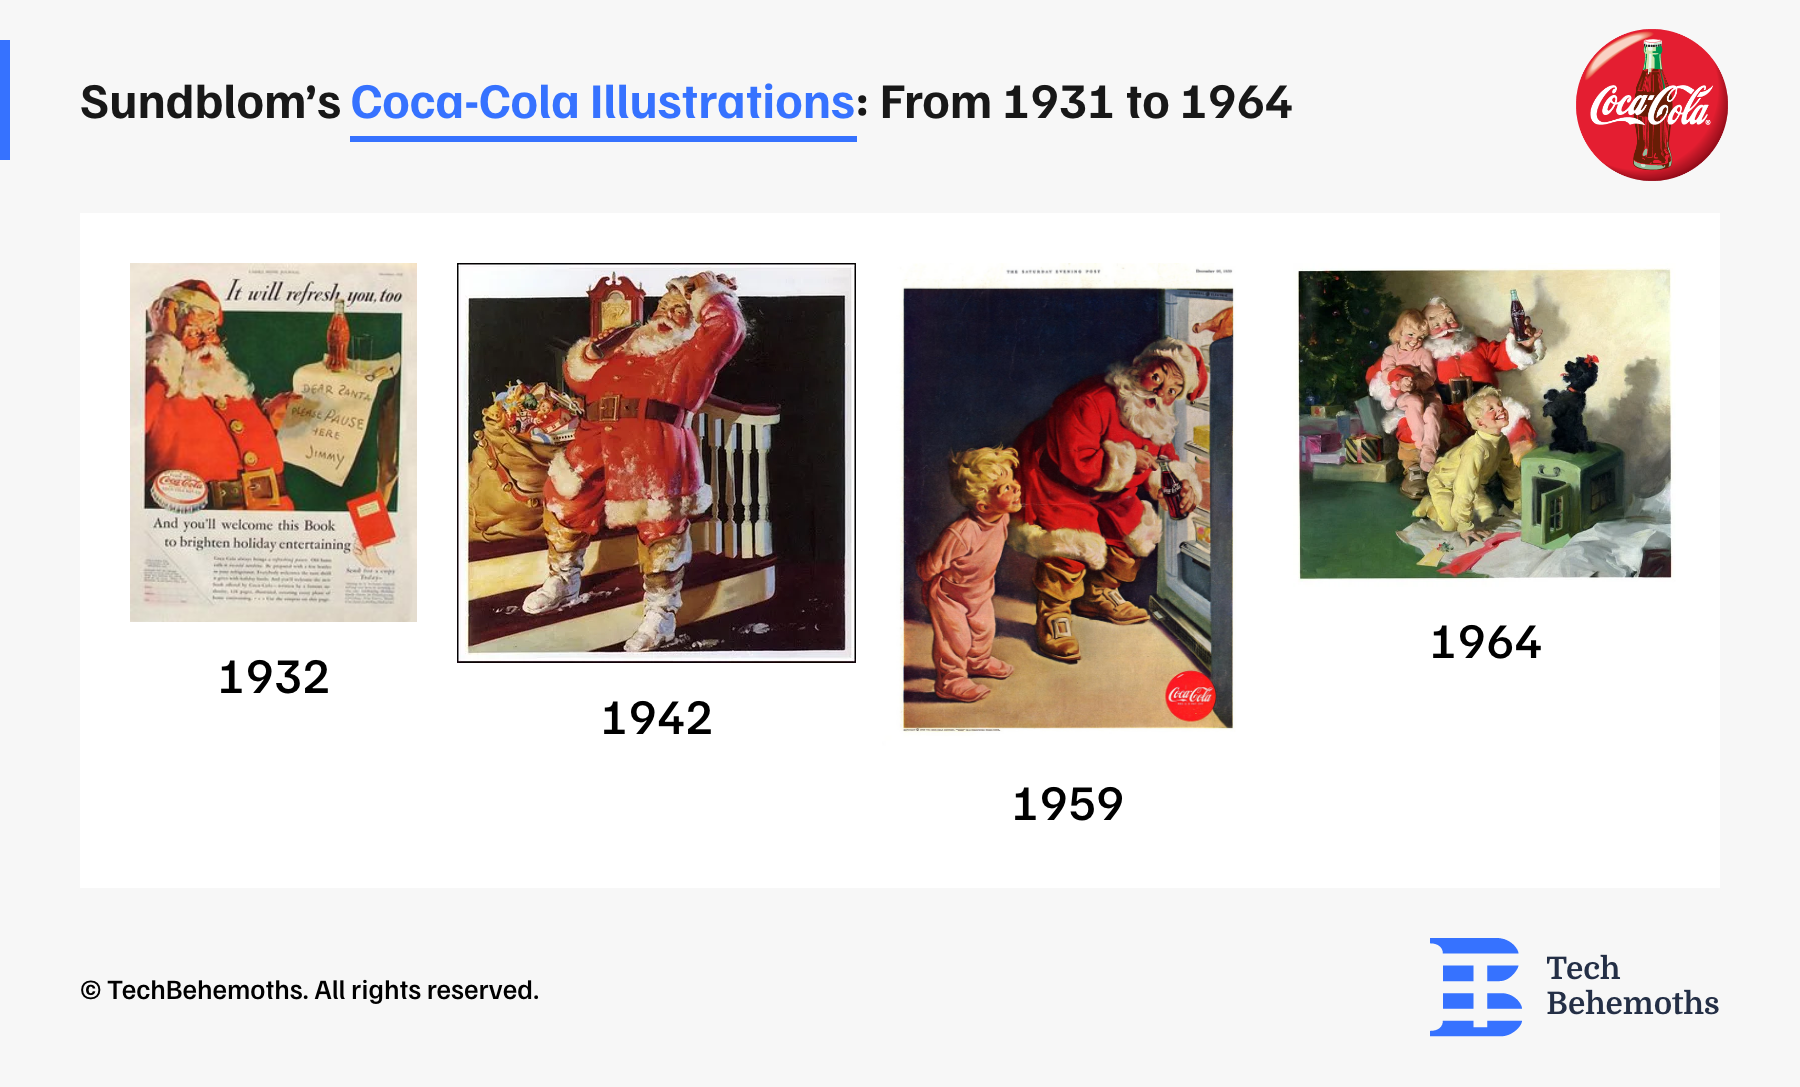 Sundblom's Coca-Cola illustrations: From 1931 to 1964